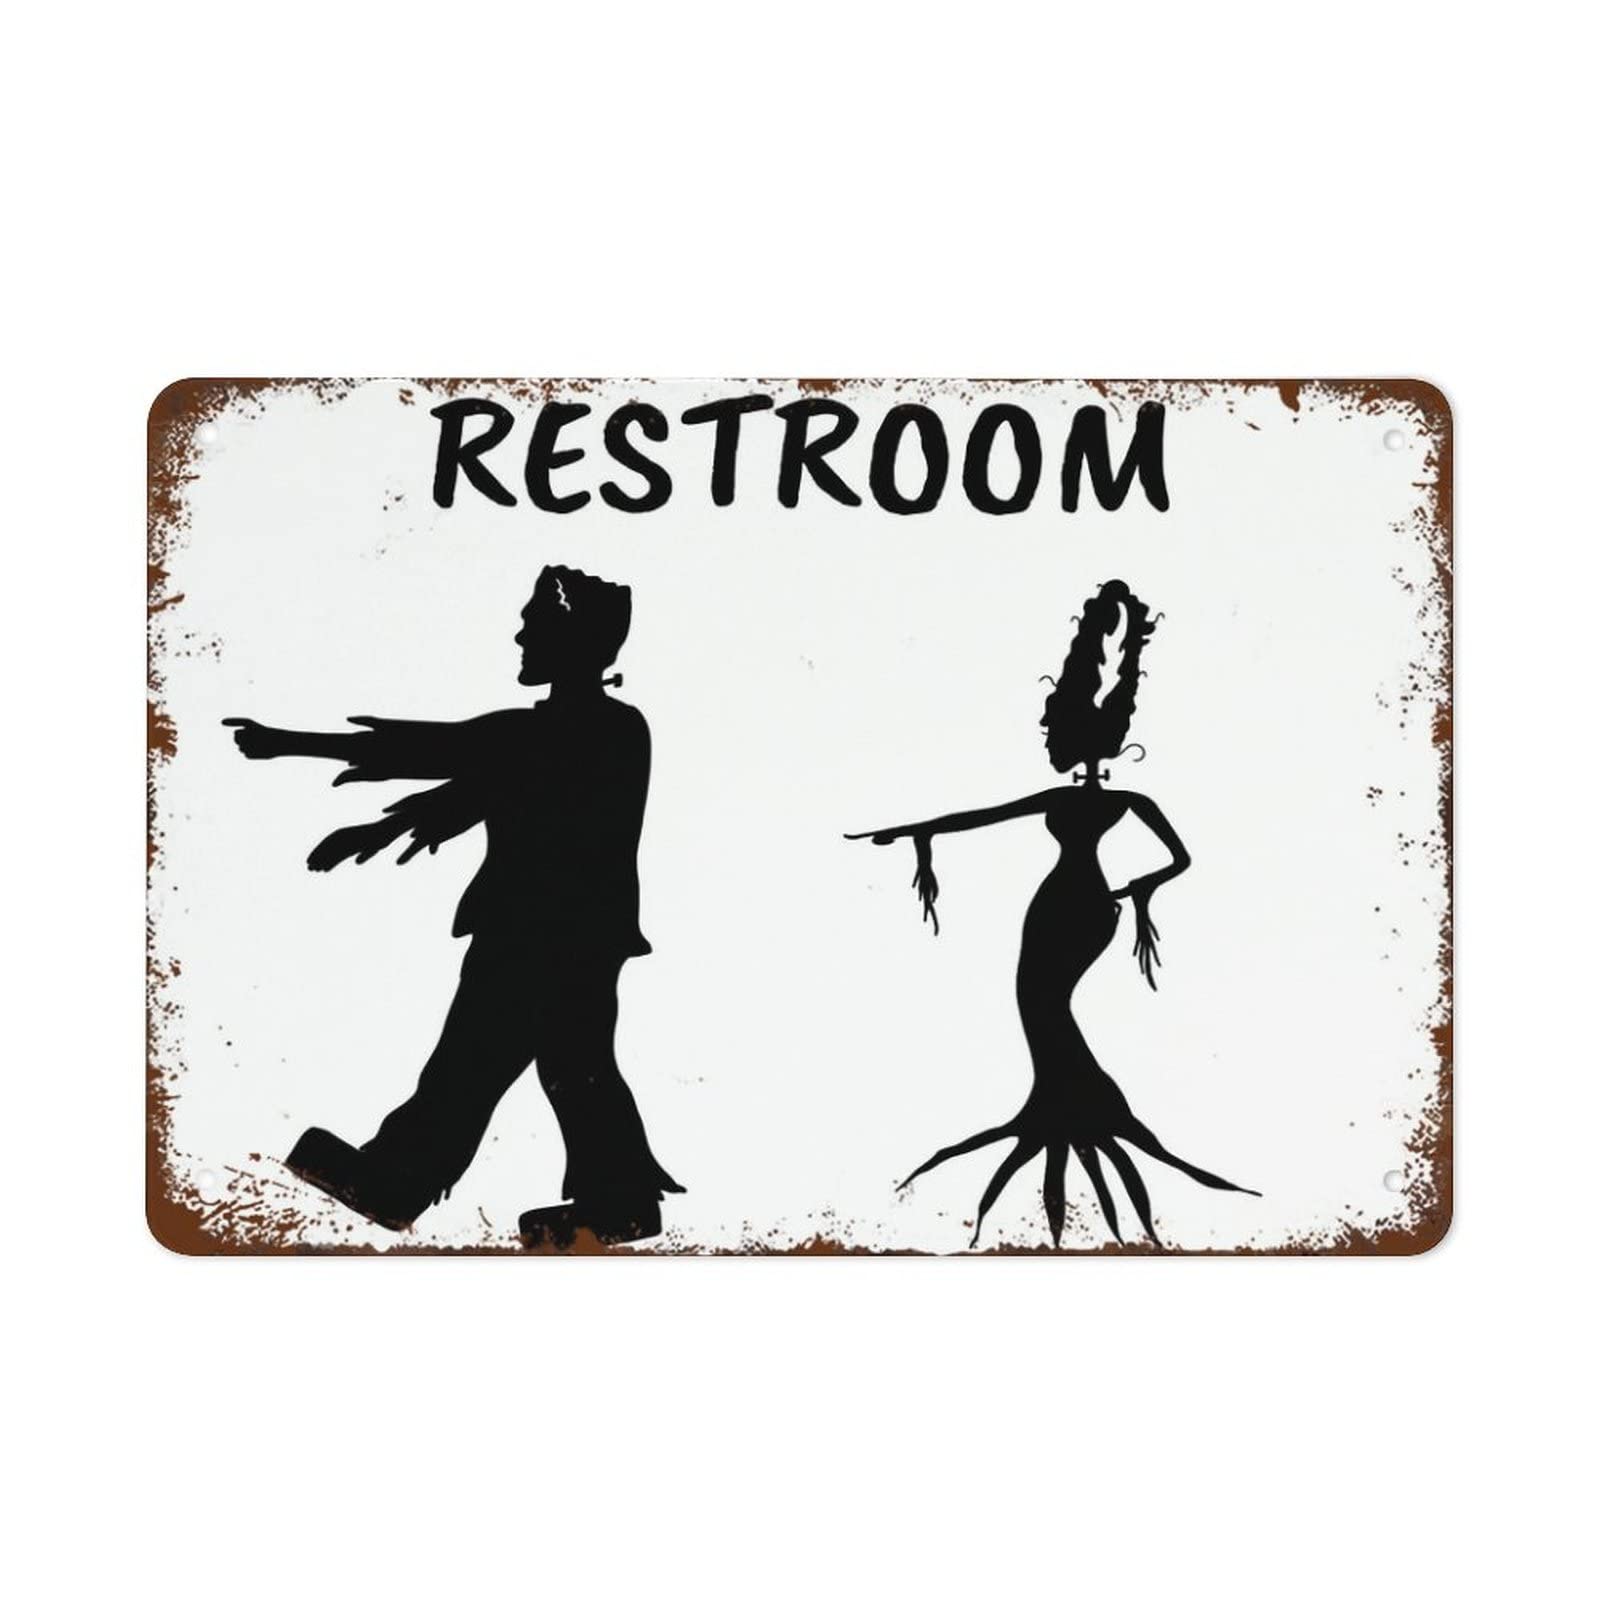 Toilet or bathroom sign